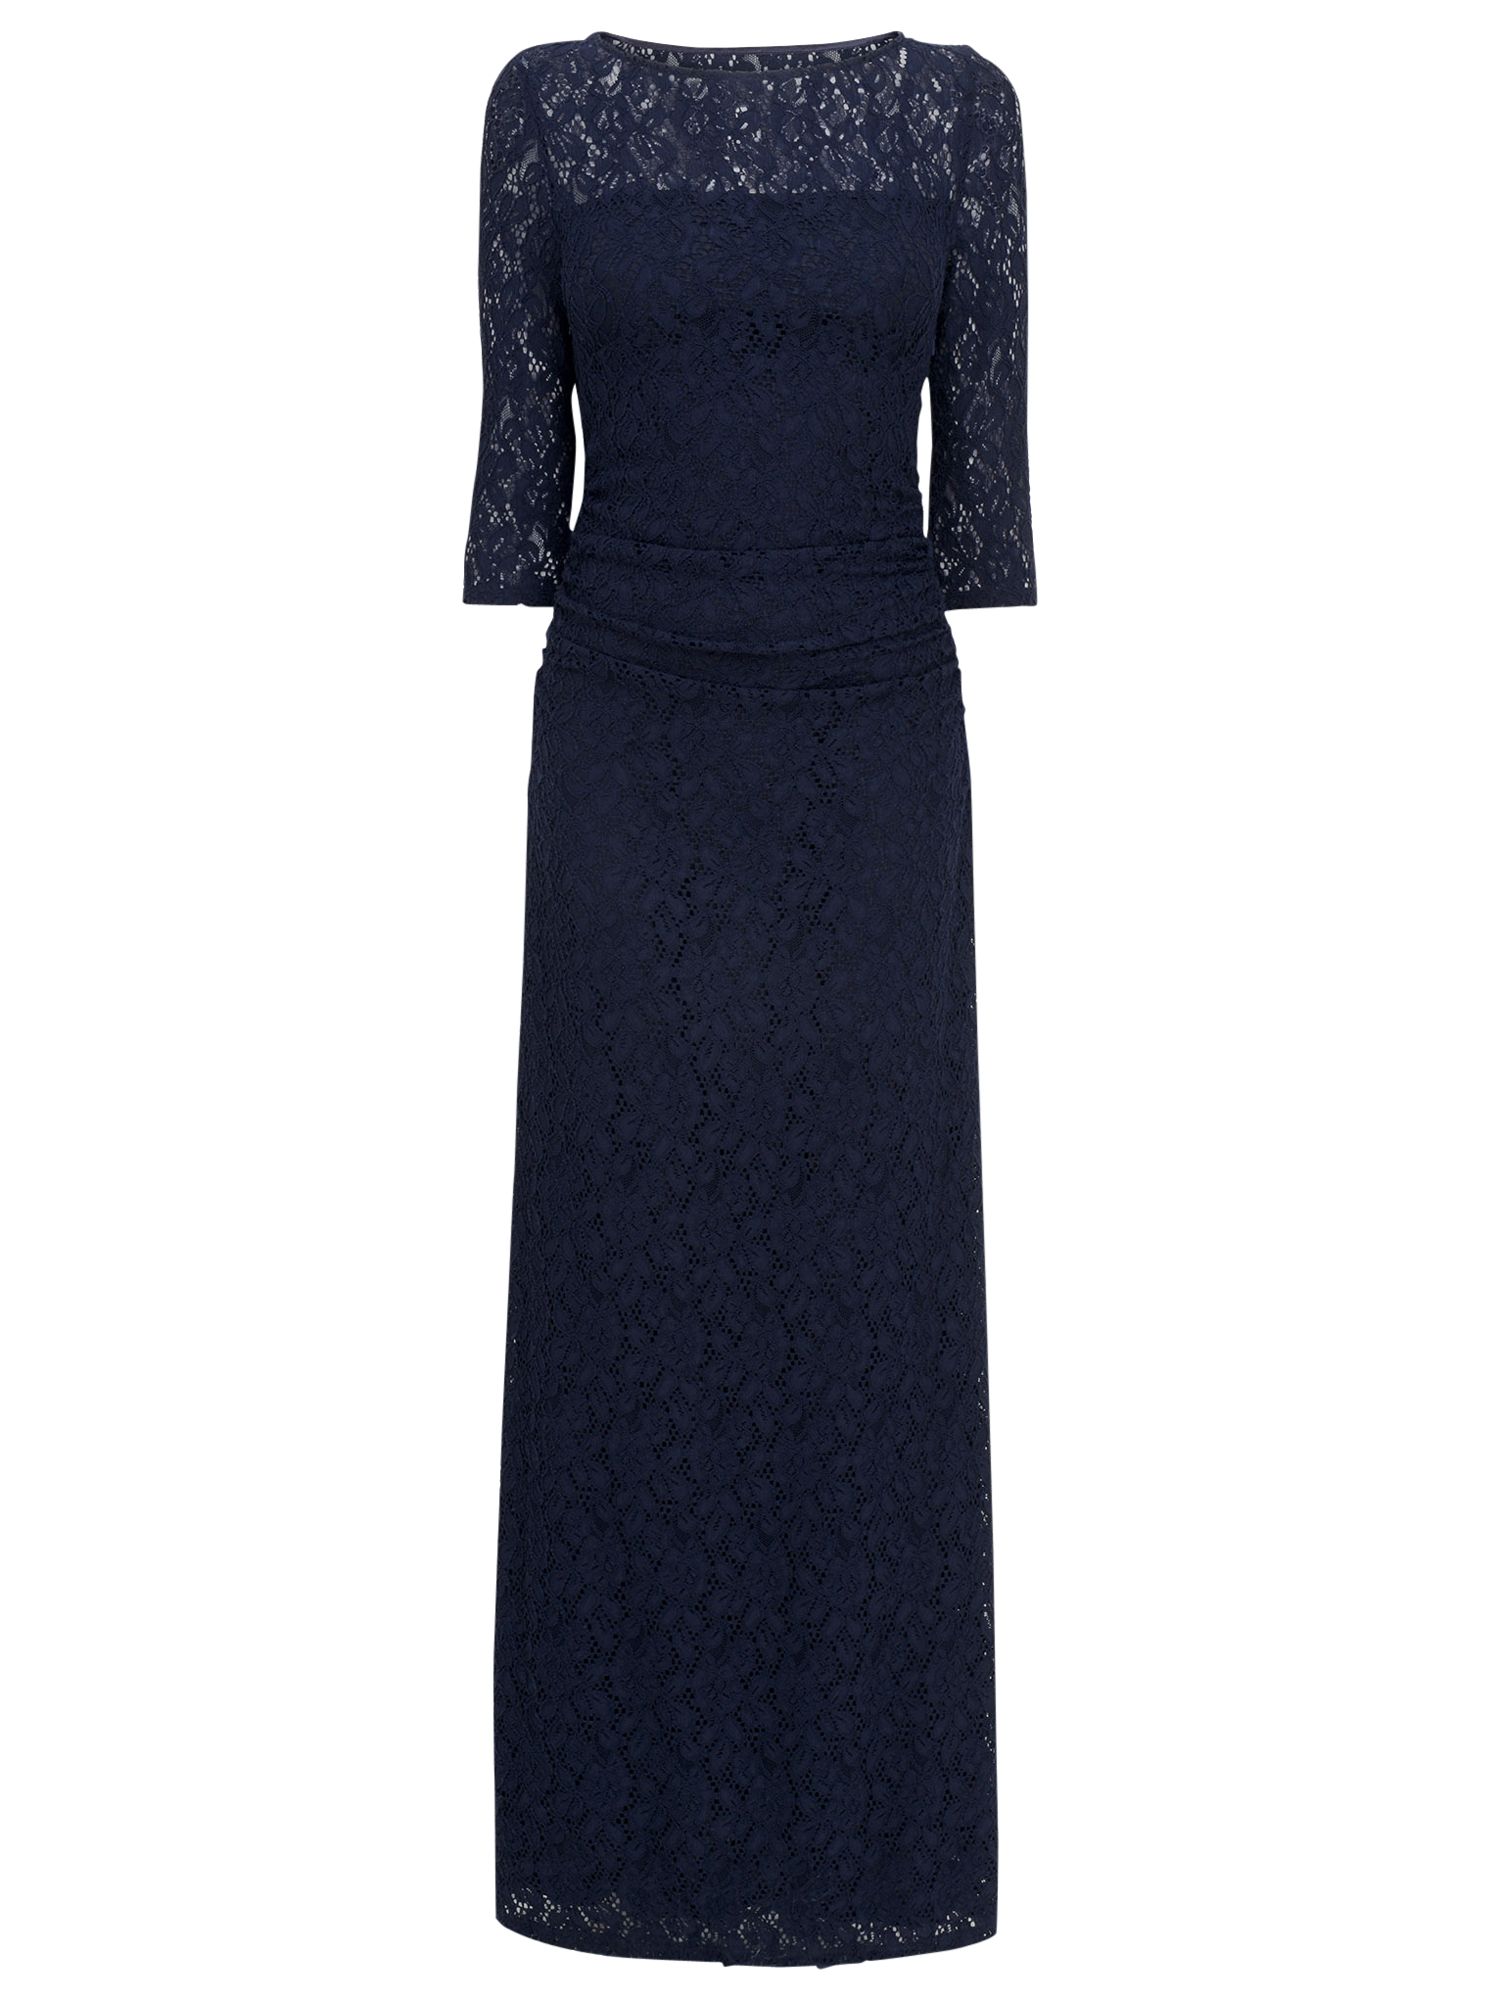 Phase Eight Angelina Lace Dress, Navy at John Lewis & Partners